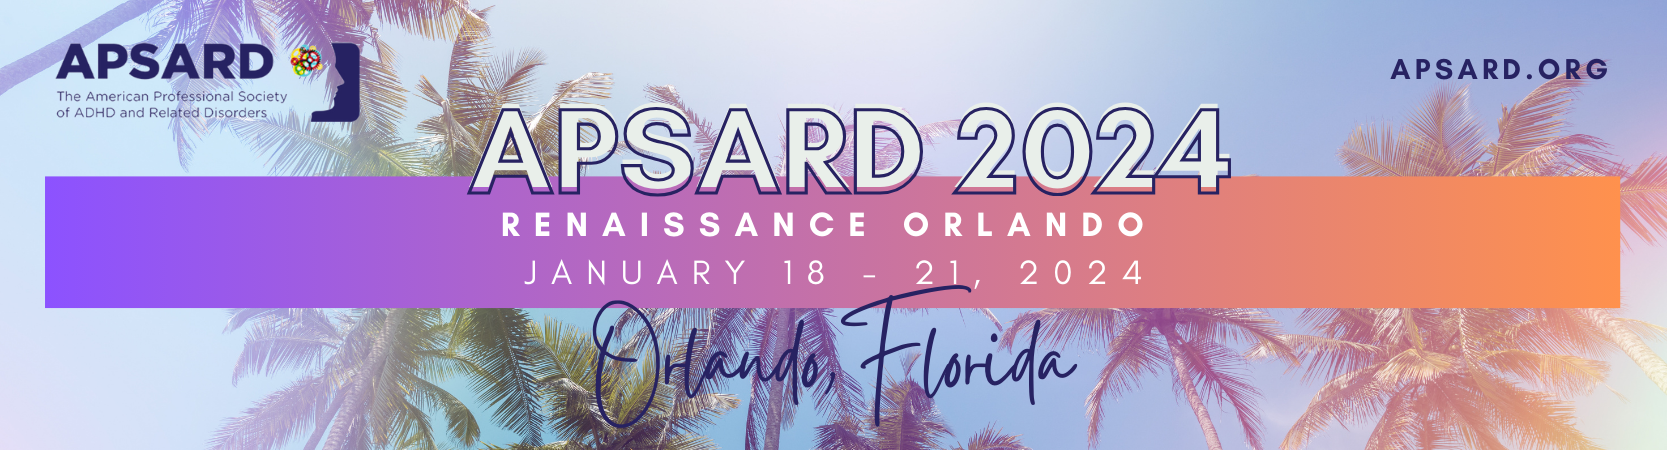 APSARD 2024 Conference Banner